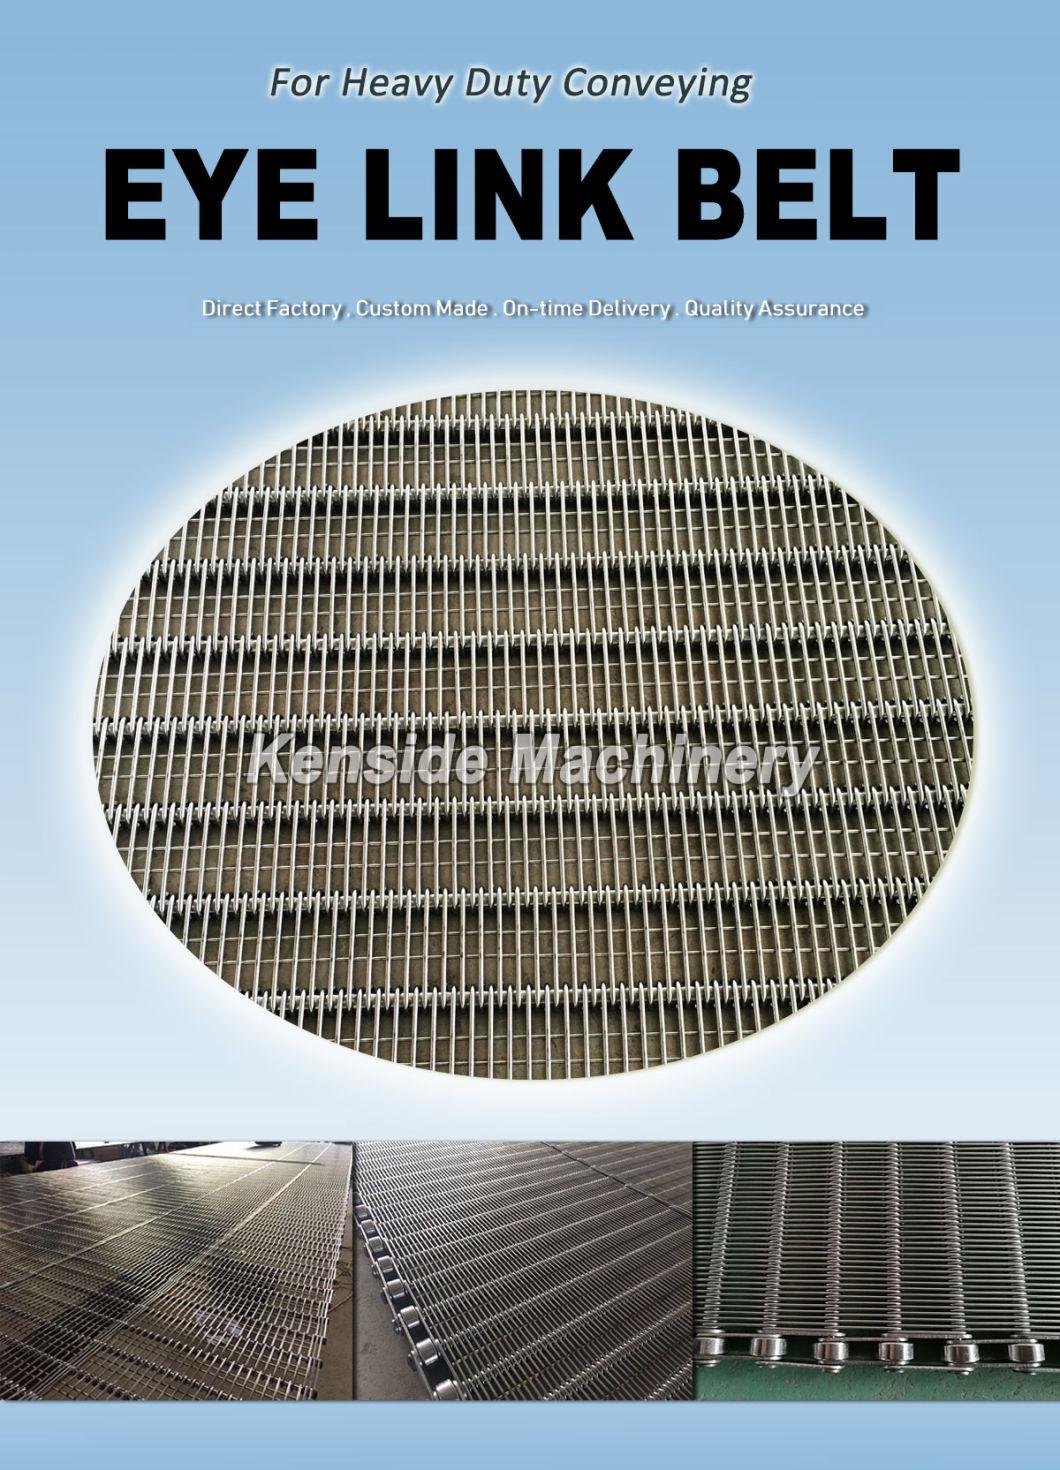 Stainless Steel Wire Ring Belt Eye Link Conveyor Belt